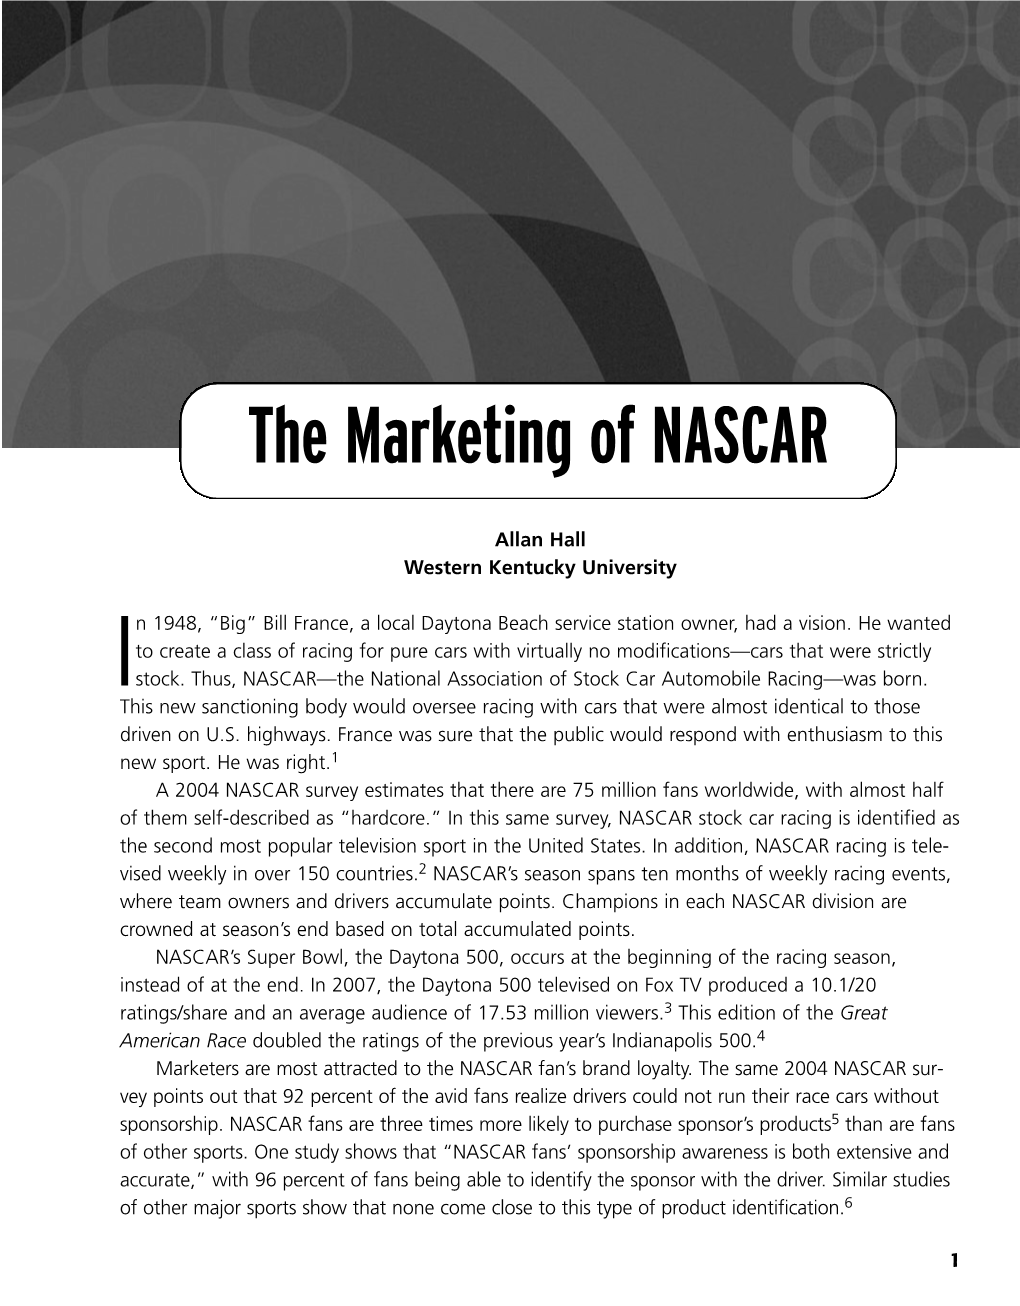 The Marketing of NASCAR